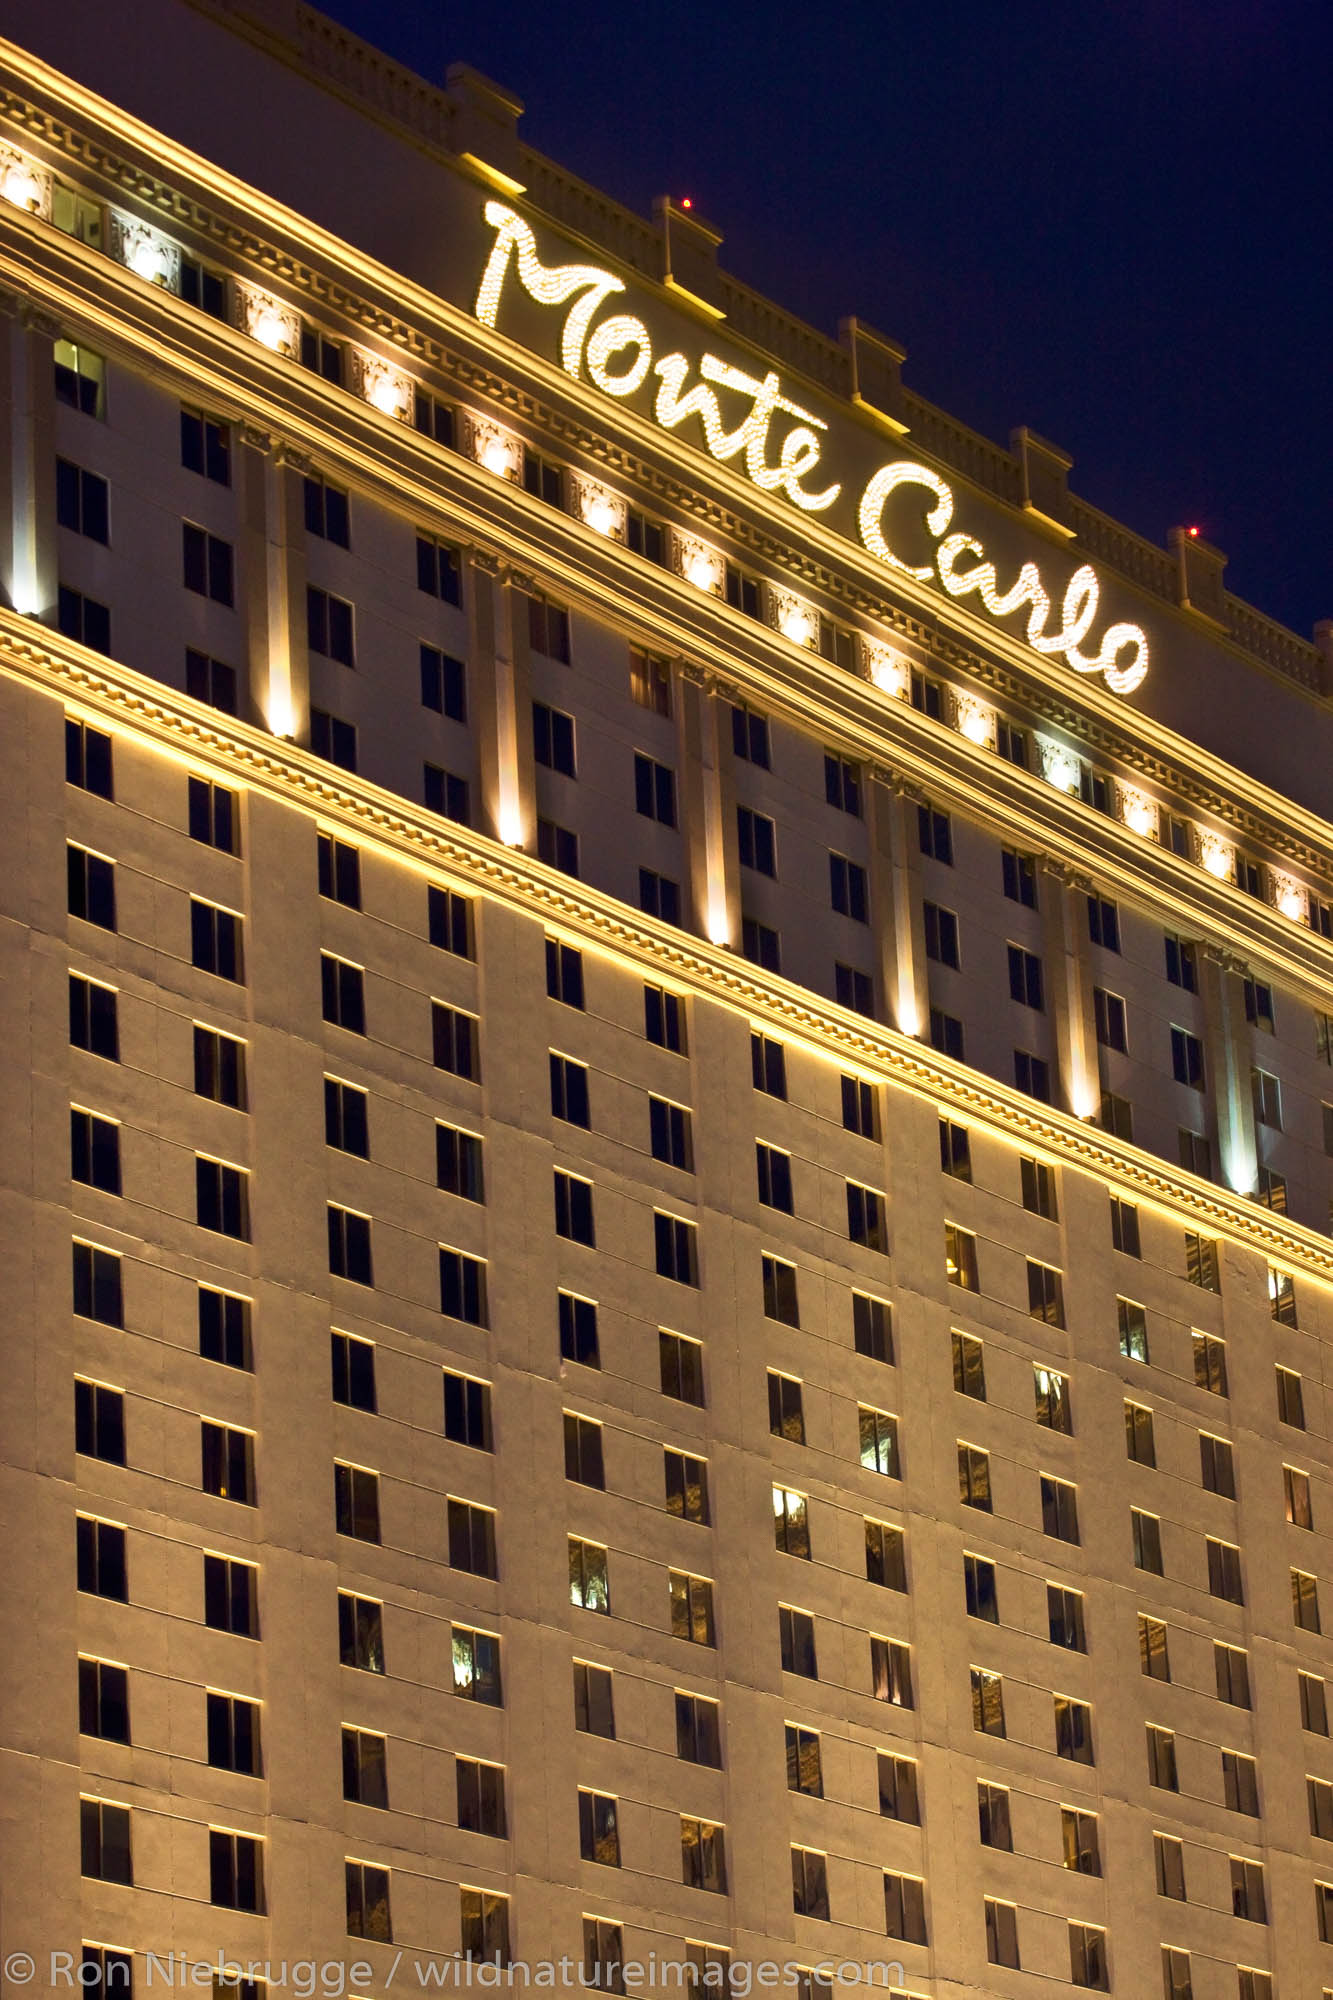 Monte Carlo Hotel and Casino, Las Vegas, Nevada.